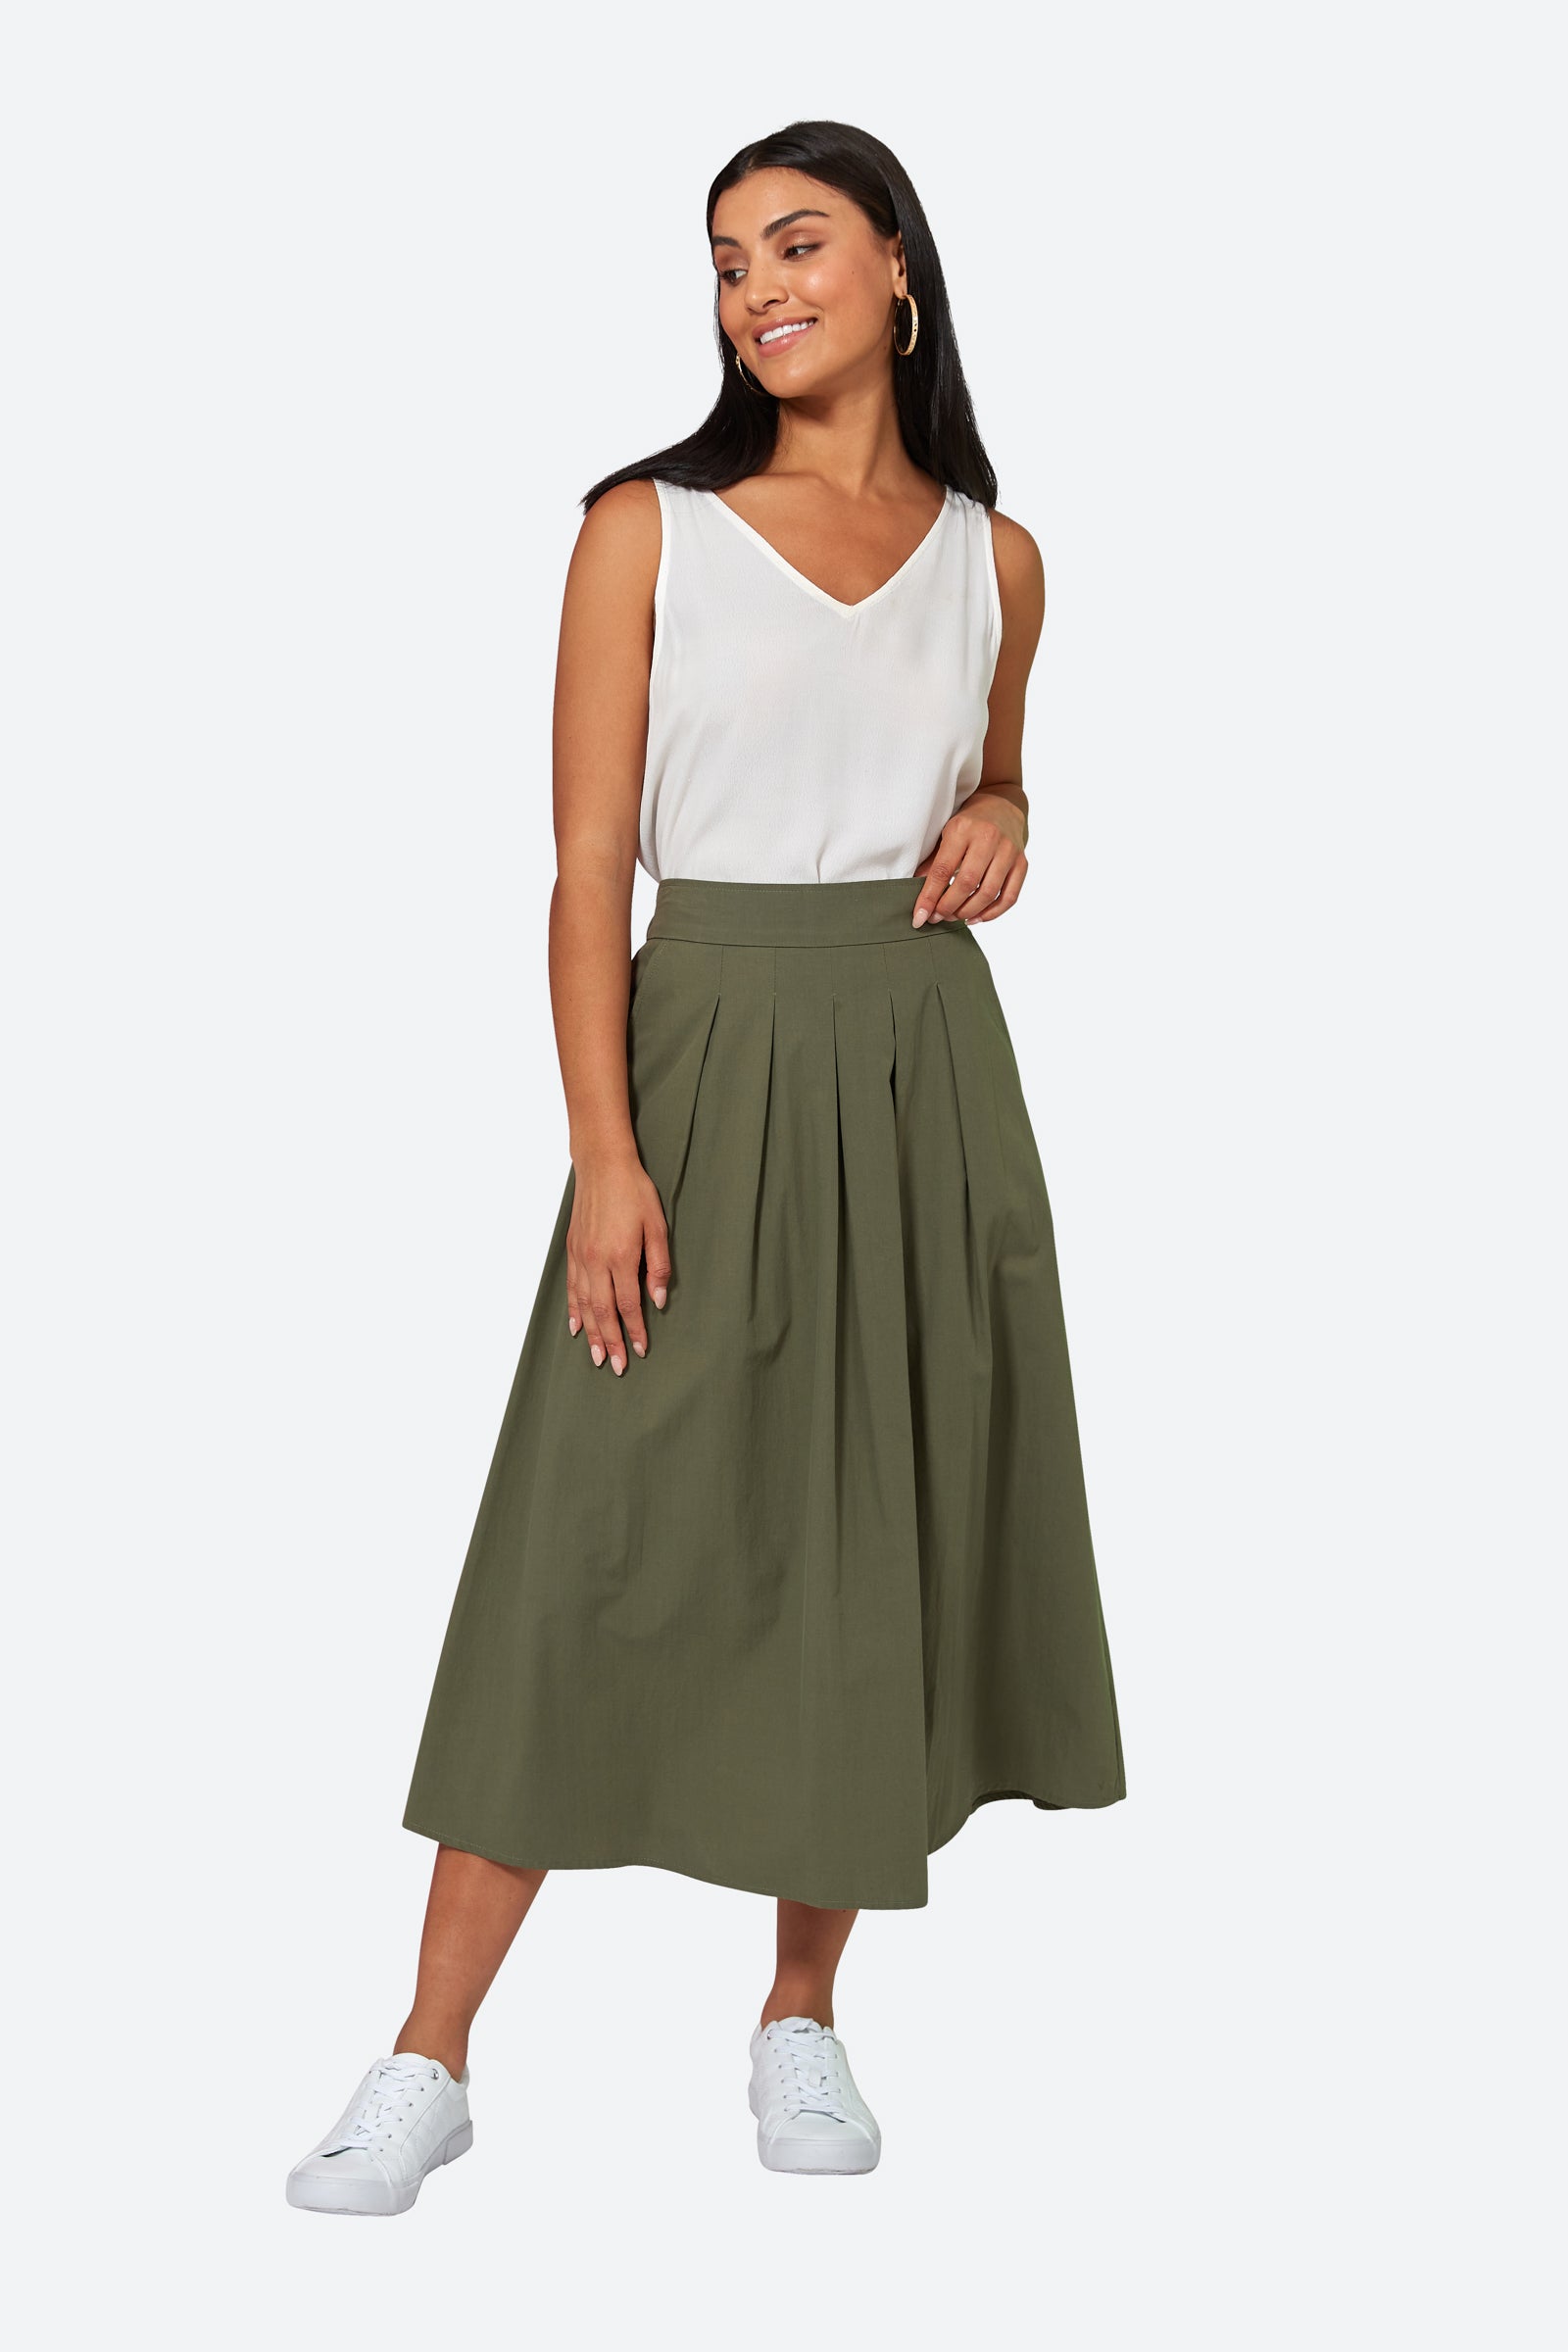 Studio Pleat Skirt - Khaki - eb&ive Clothing - Skirt Maxi